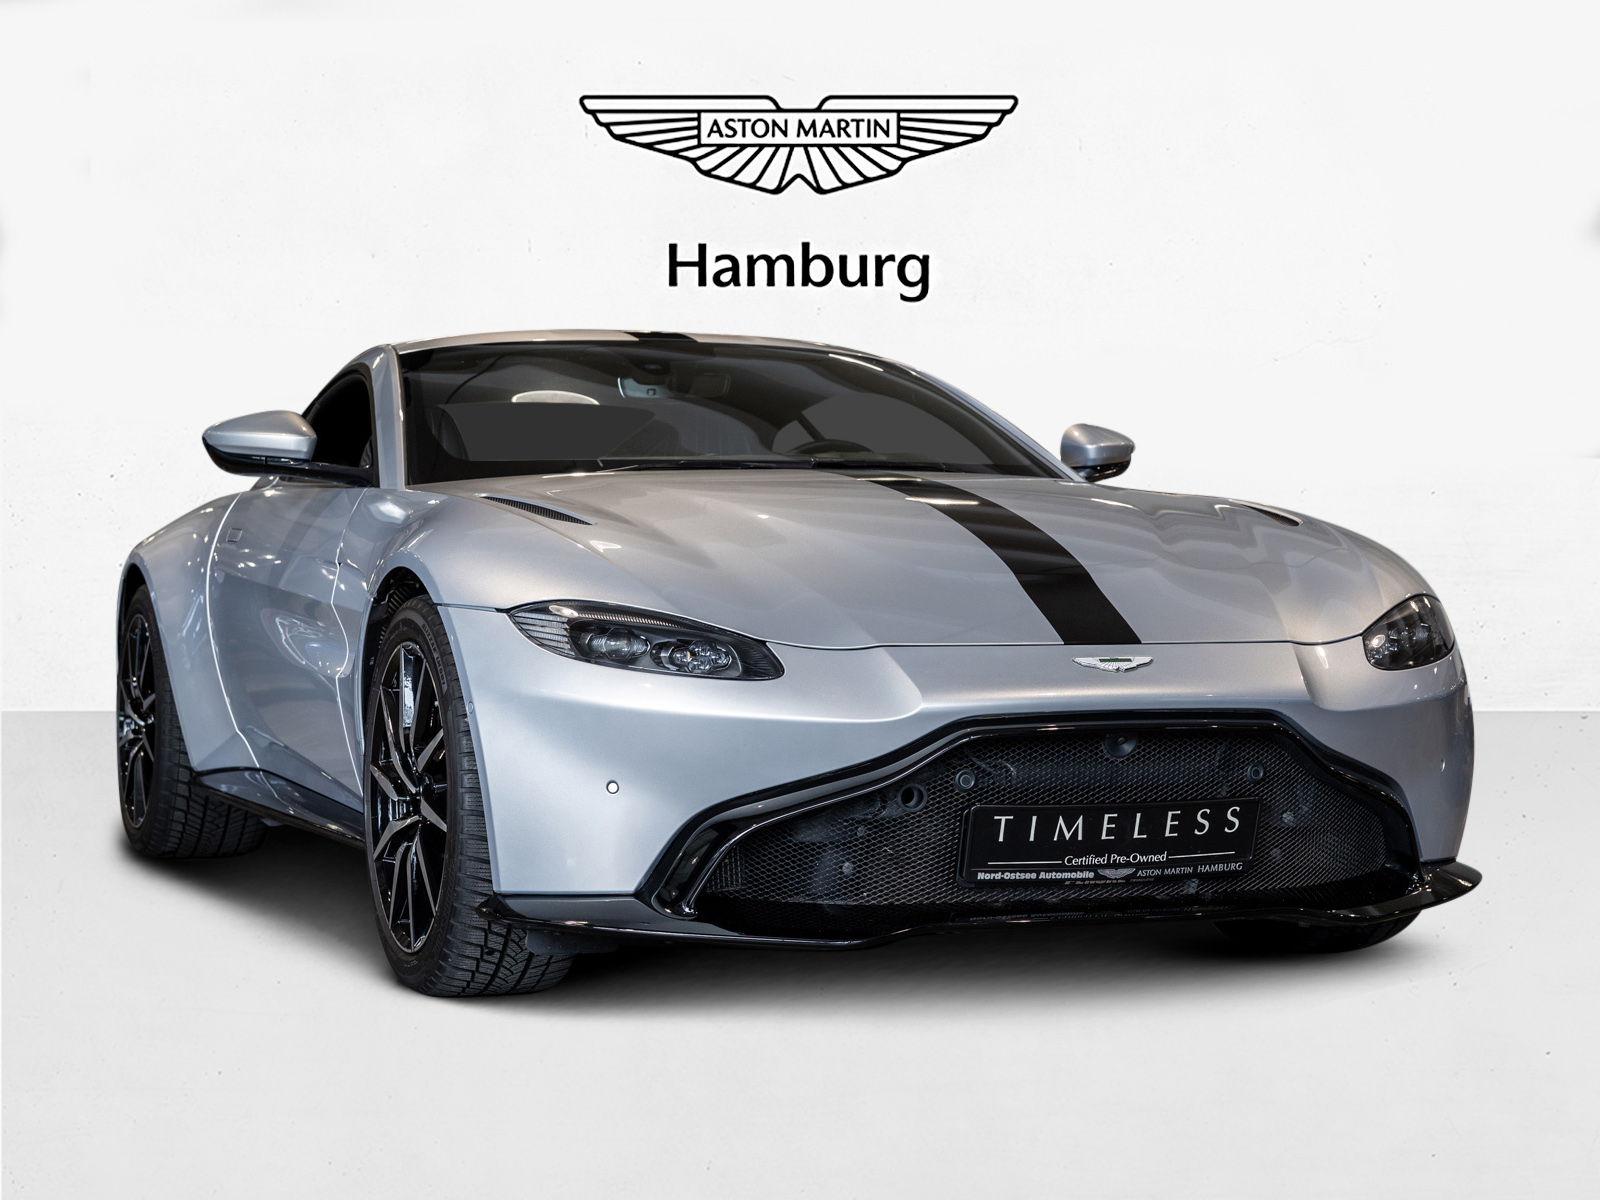 Aston Martin V8 Vantage Coupé - Aston Martin Hamburg